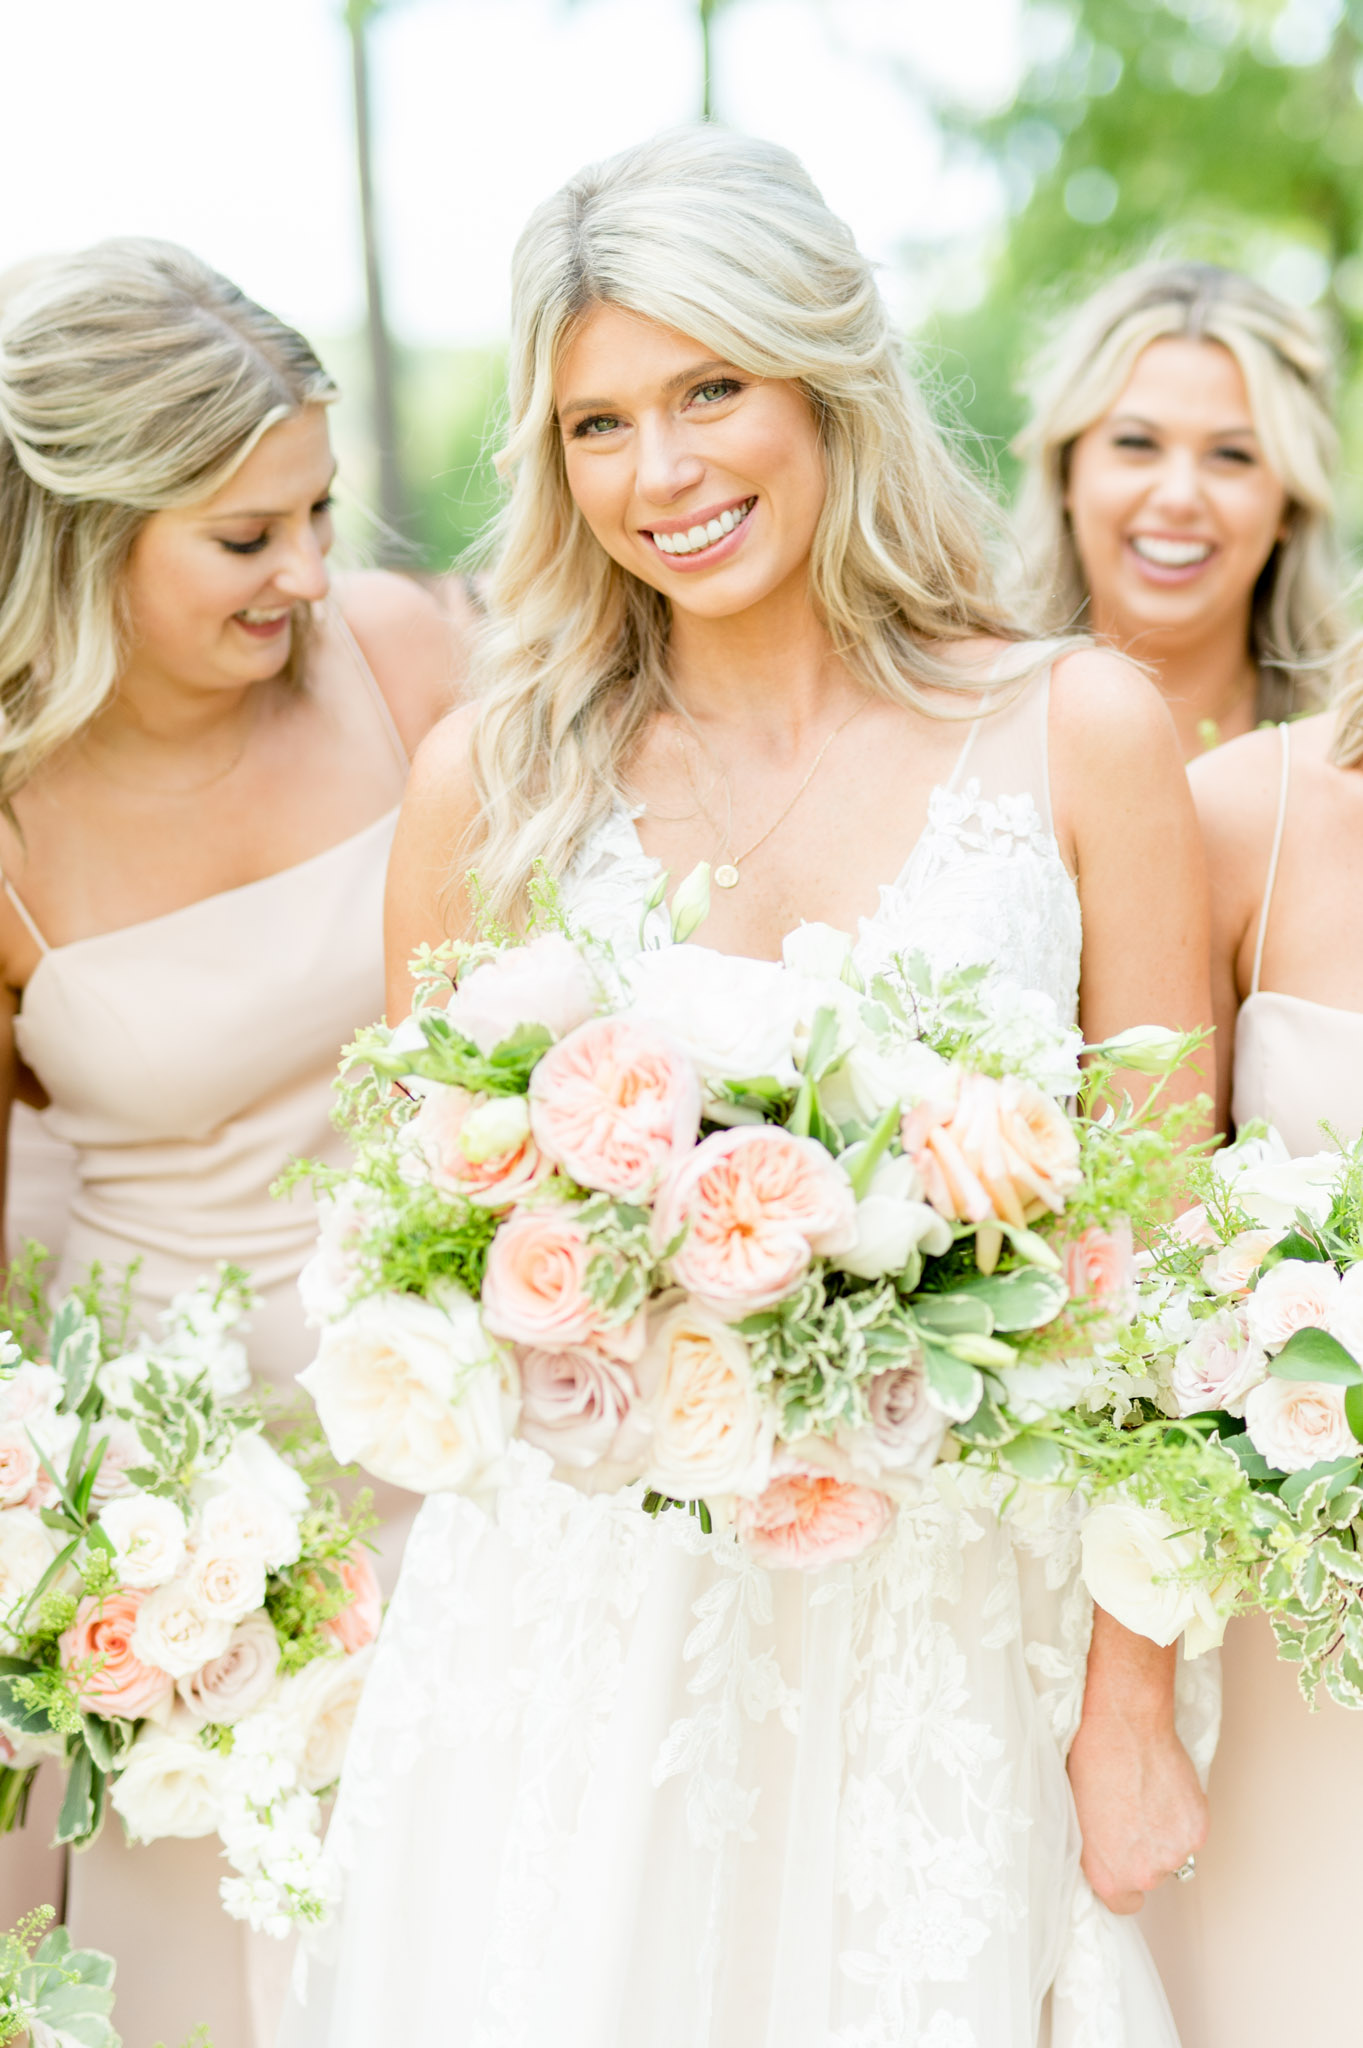 Bride smiles at camera while bridesmaids laugh around her.